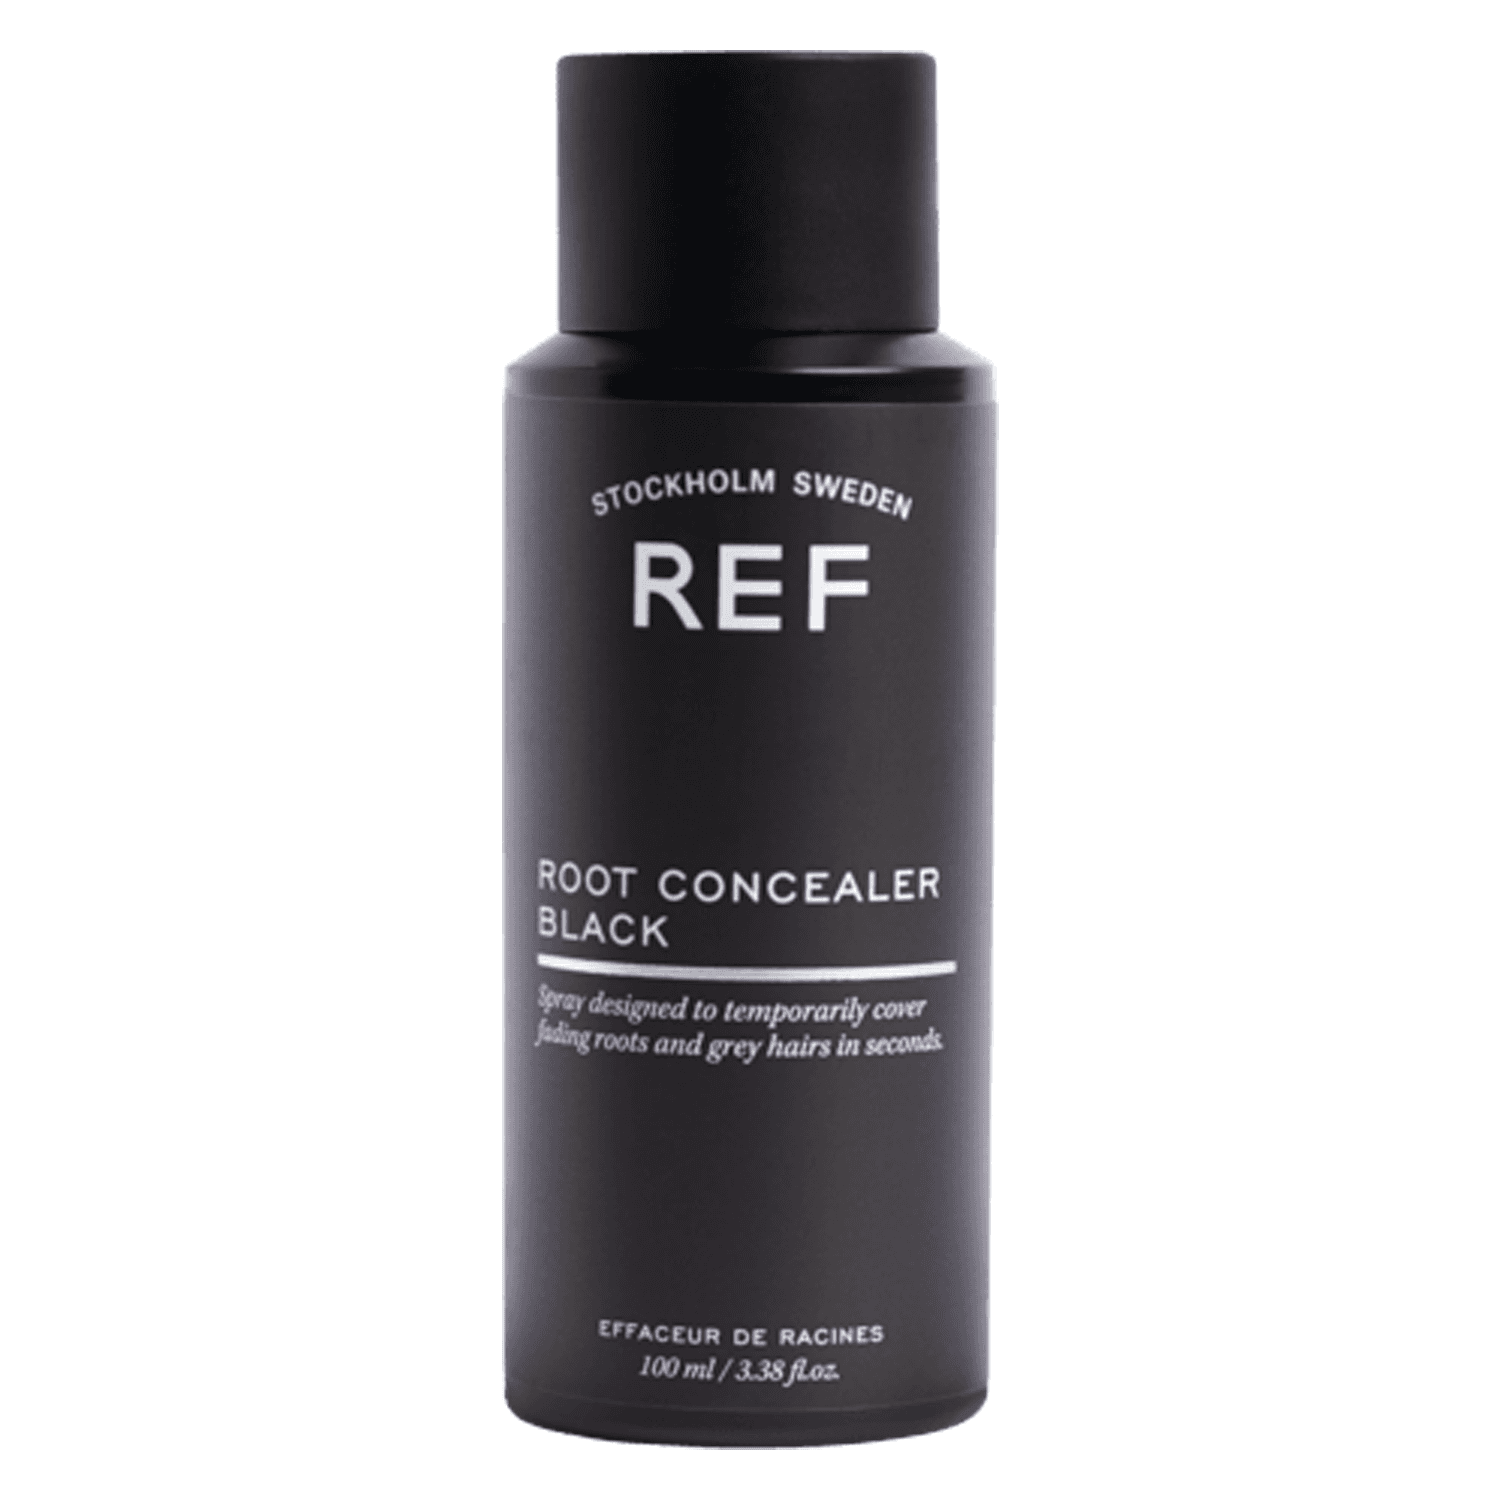 REF Styling - Root Concealer Black